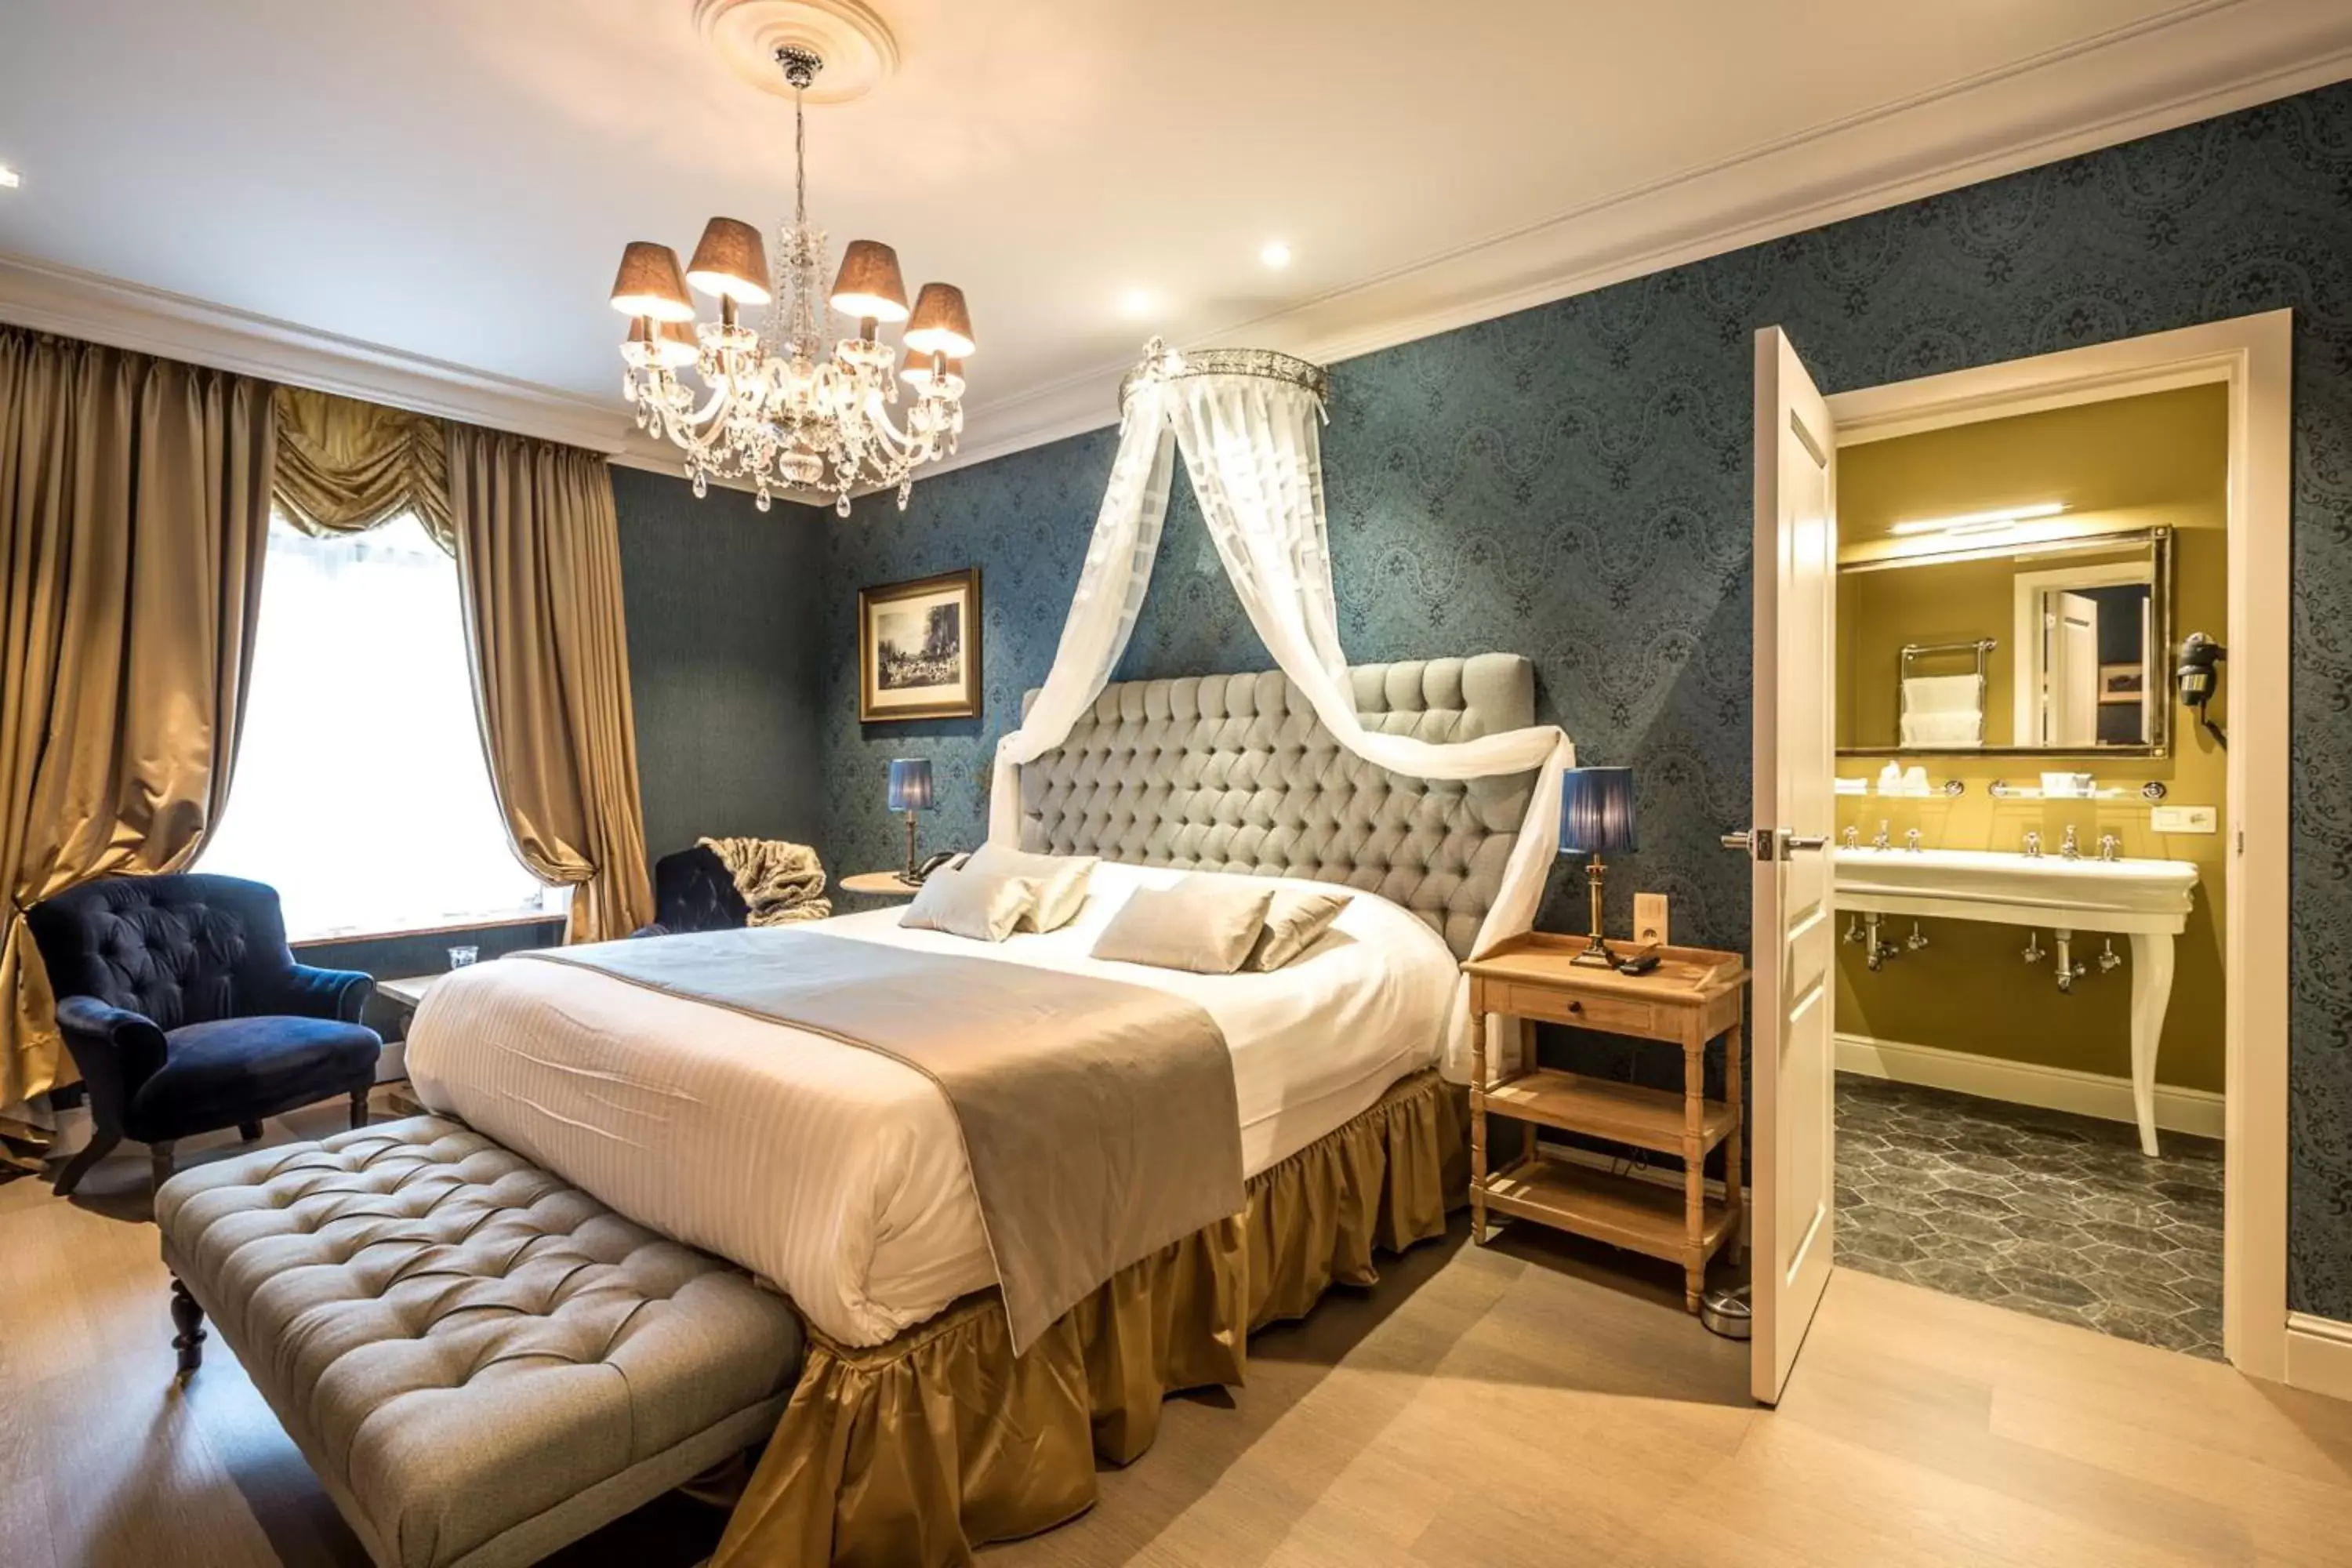 Bedroom, Room Photo in Boutique Hotel De Castillion - Small elegant family hotel